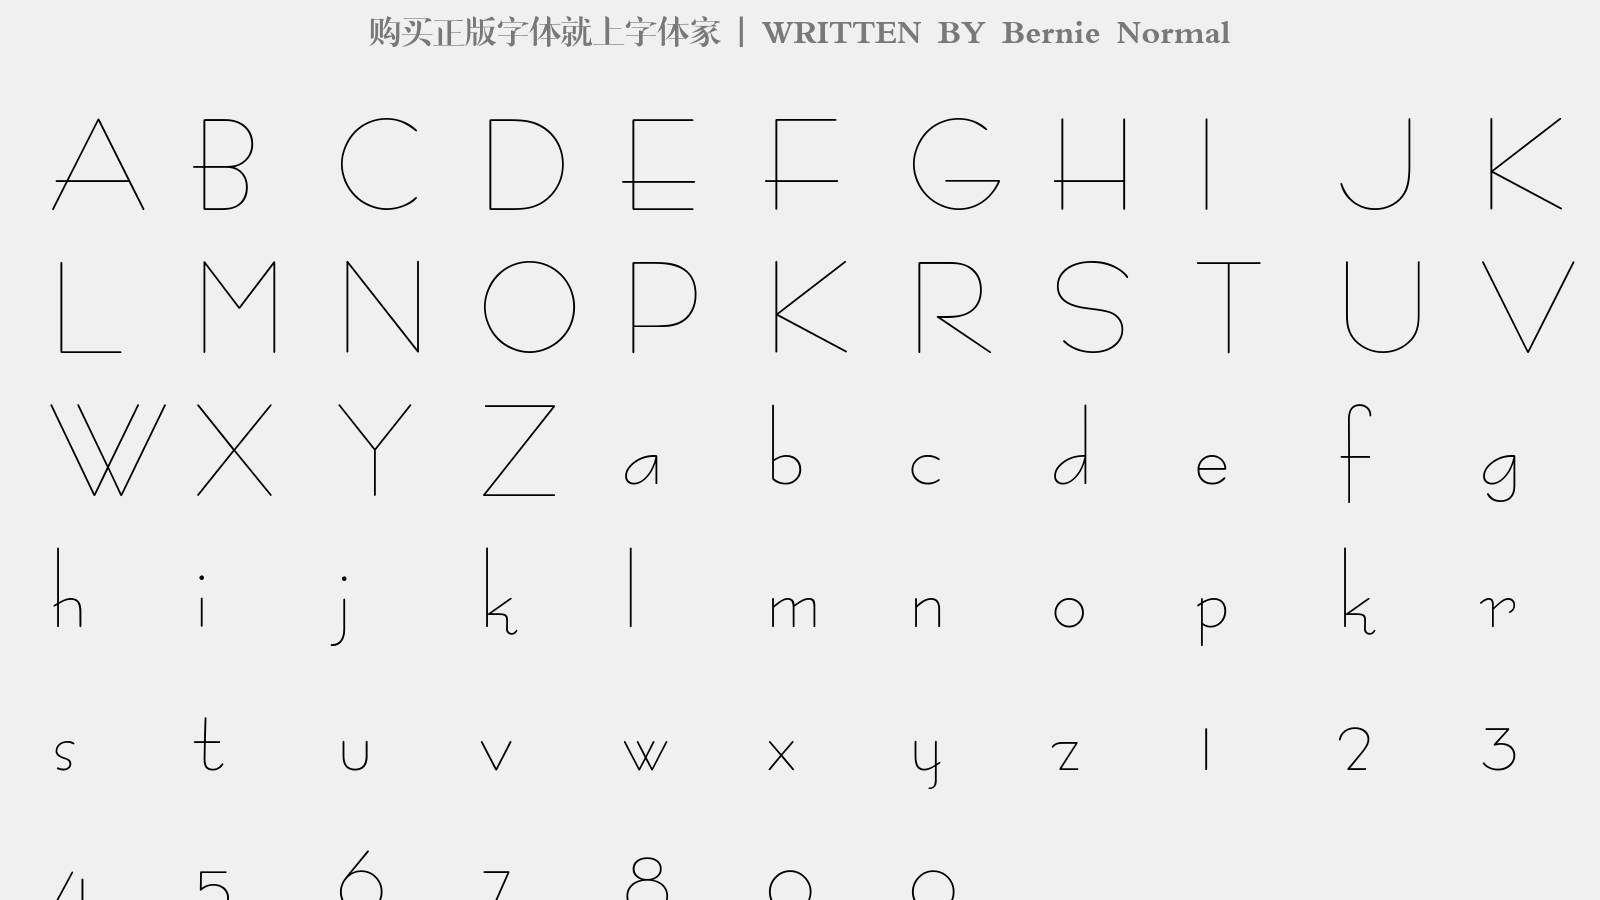 Bernie Normal - 大写字母/小写字母/数字